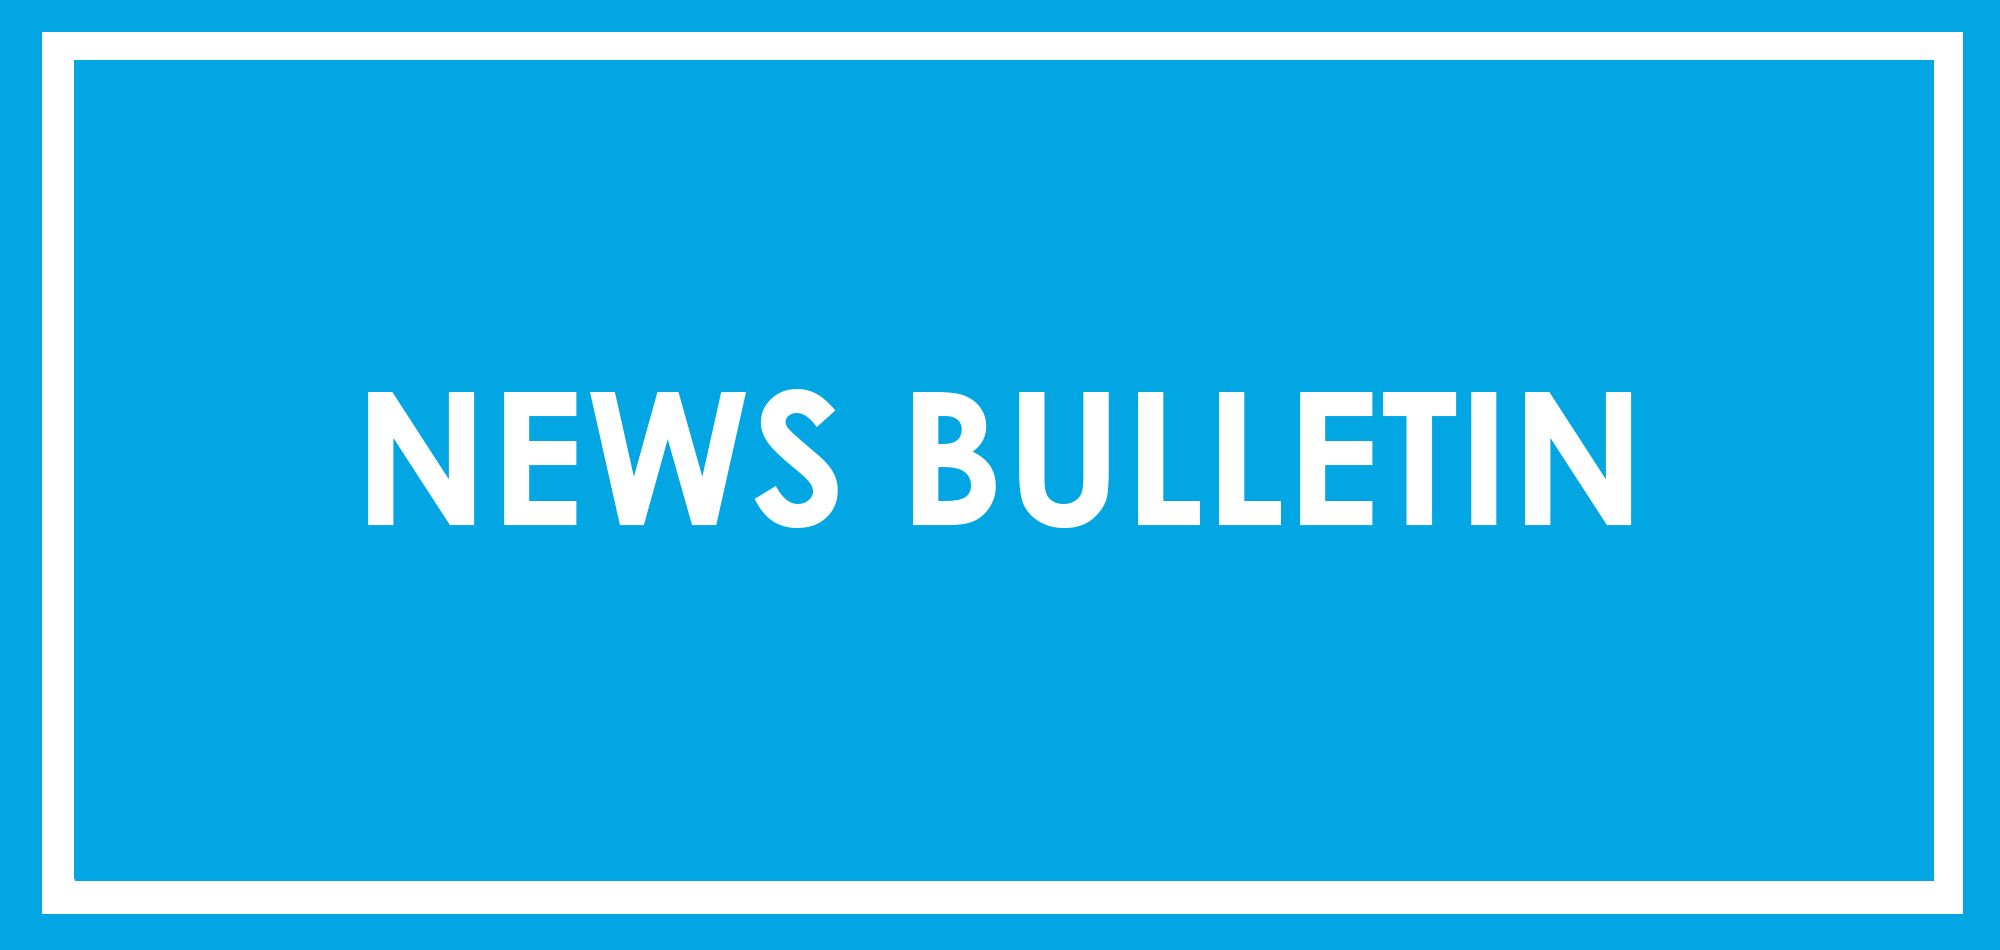 News Bulletin - 01.03.21